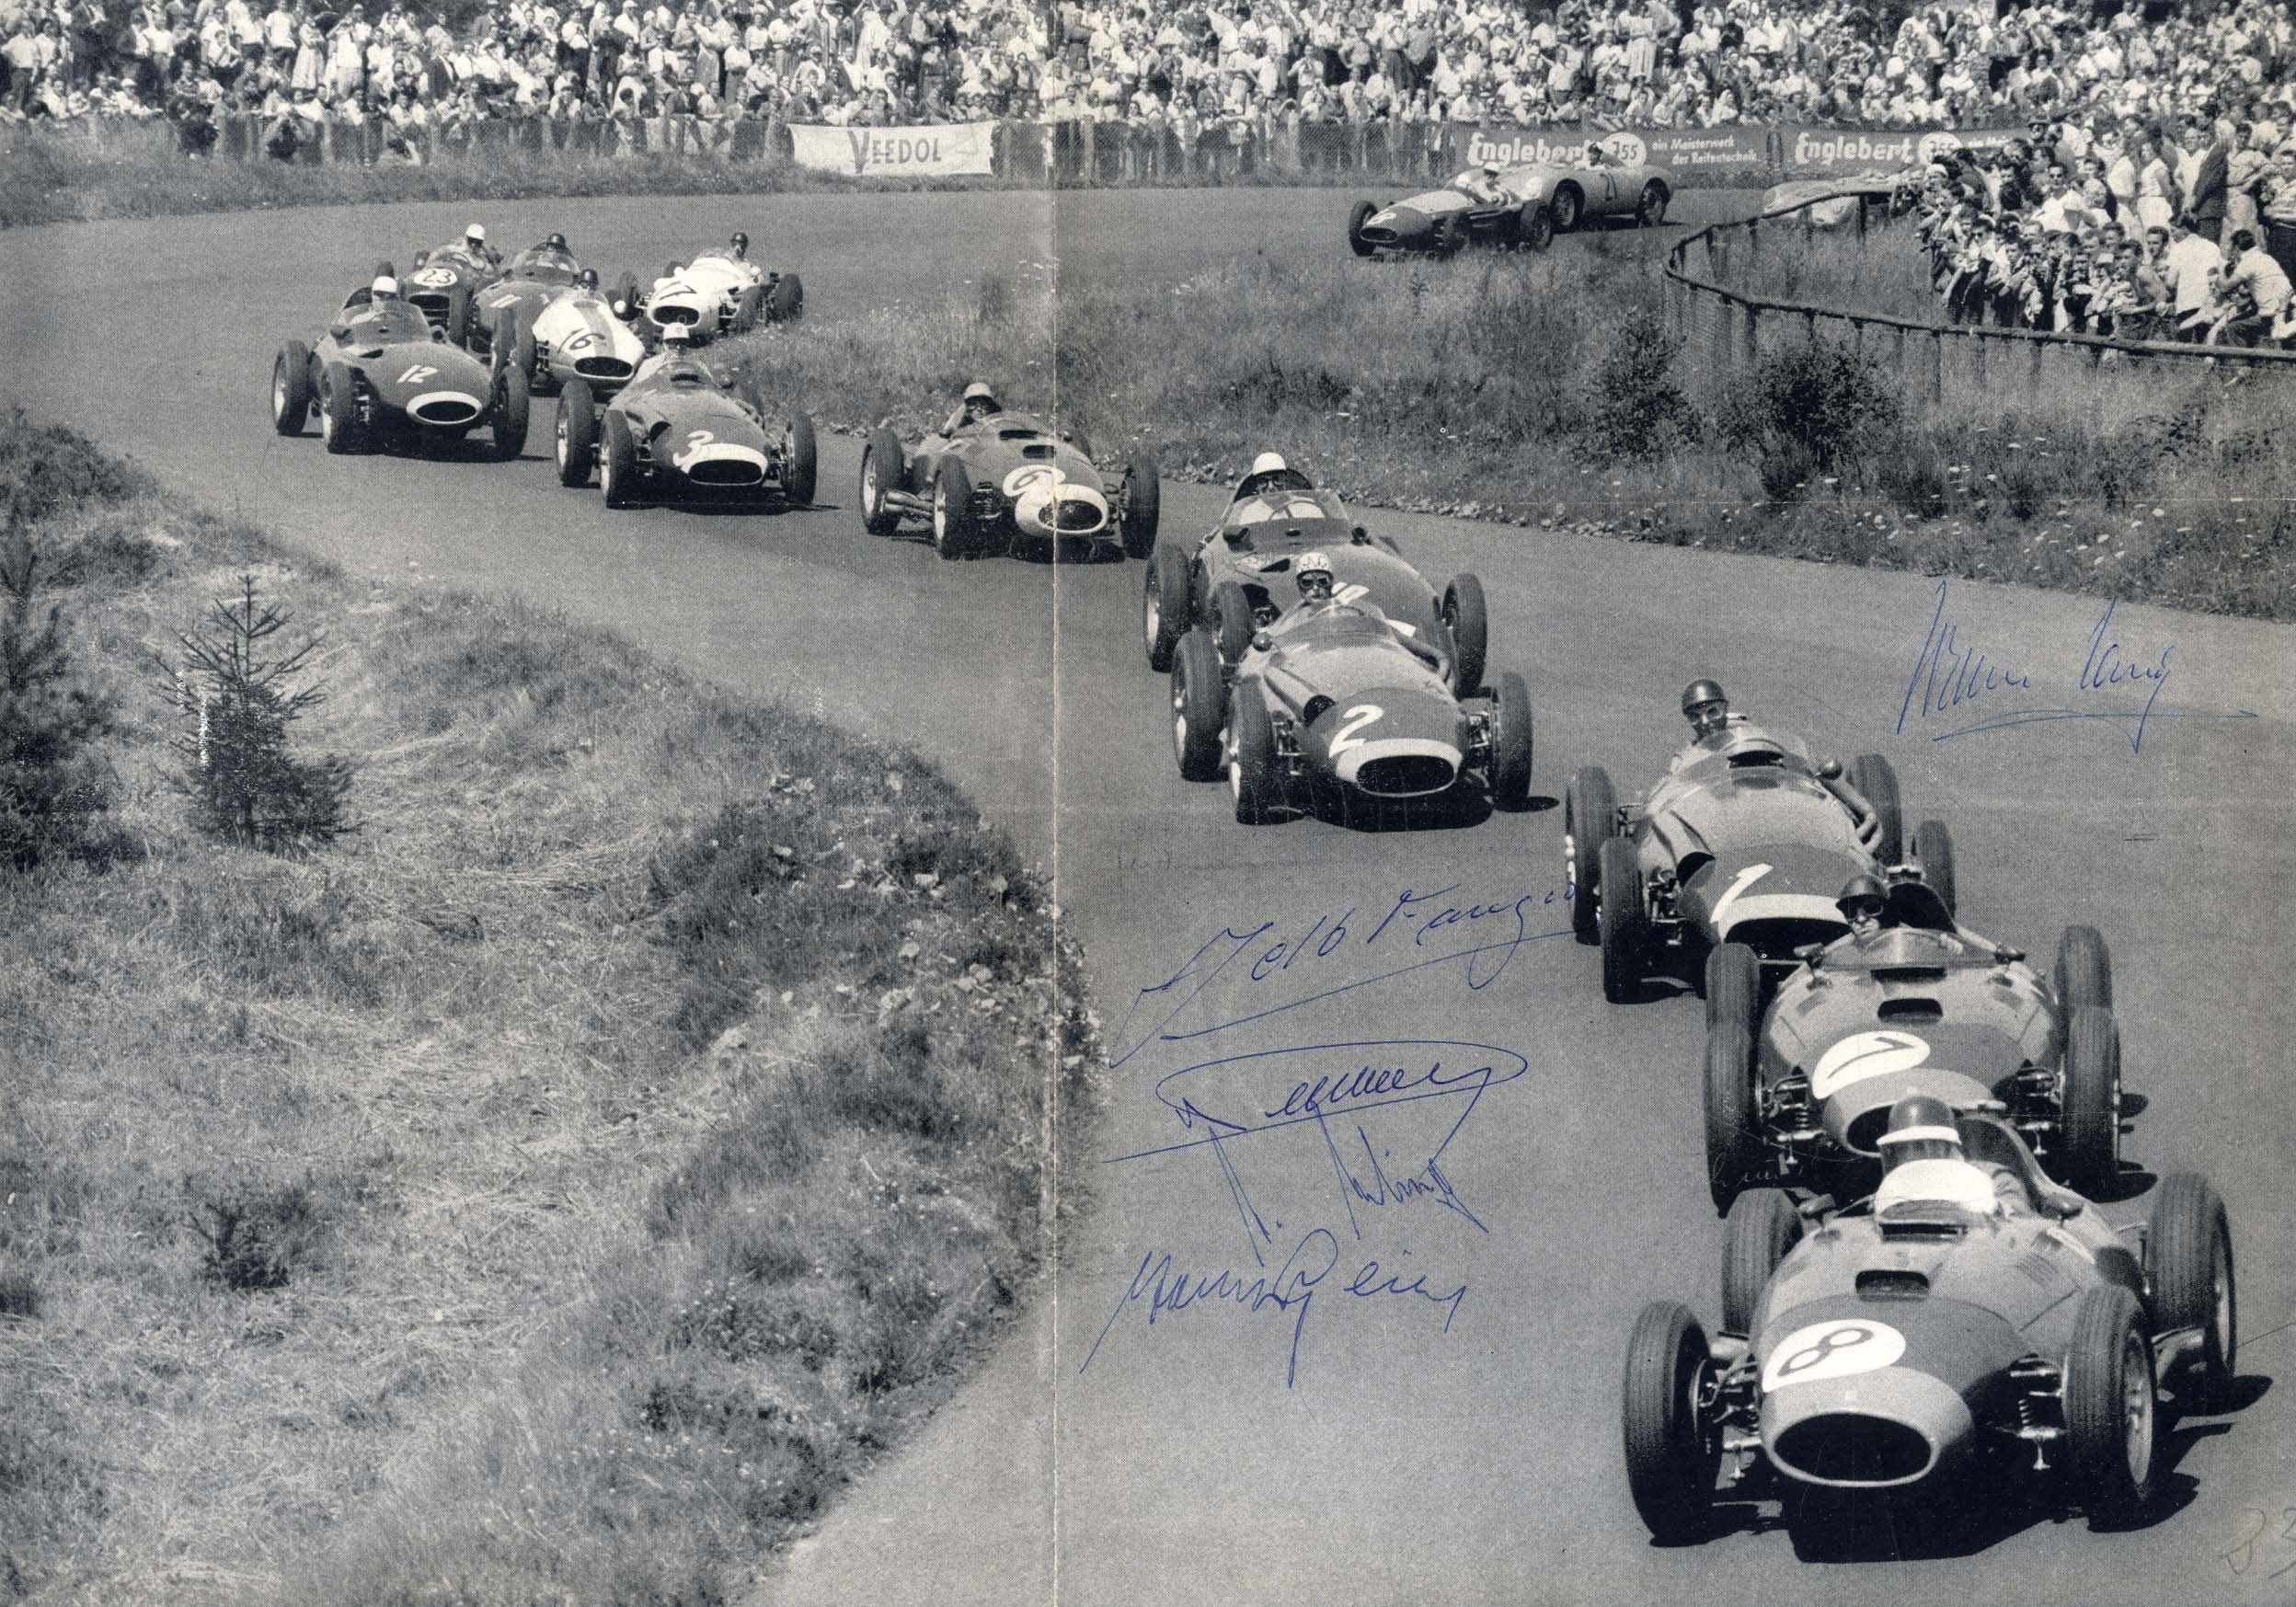 Alfred &amp; Juan Manuel &amp; Others Neubauer &amp; Fangio &amp; Others Autograph Autogramm | ID 7463926988949